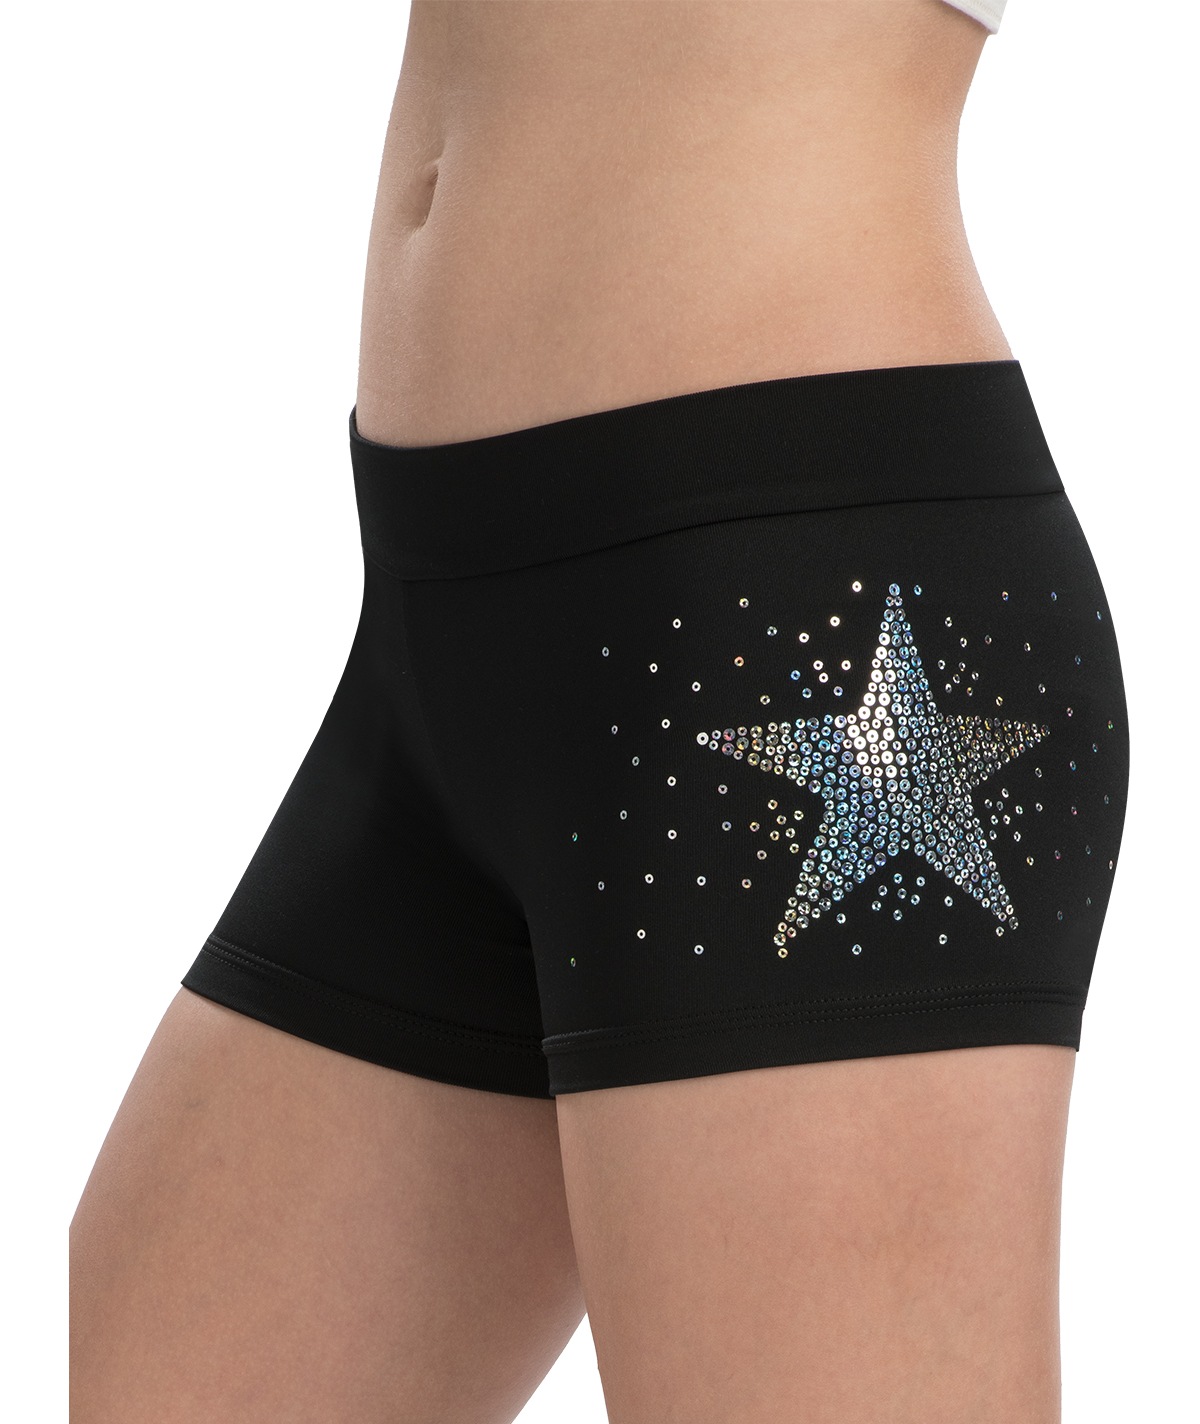 GK All Star Sequinz Star Cheer Shorts